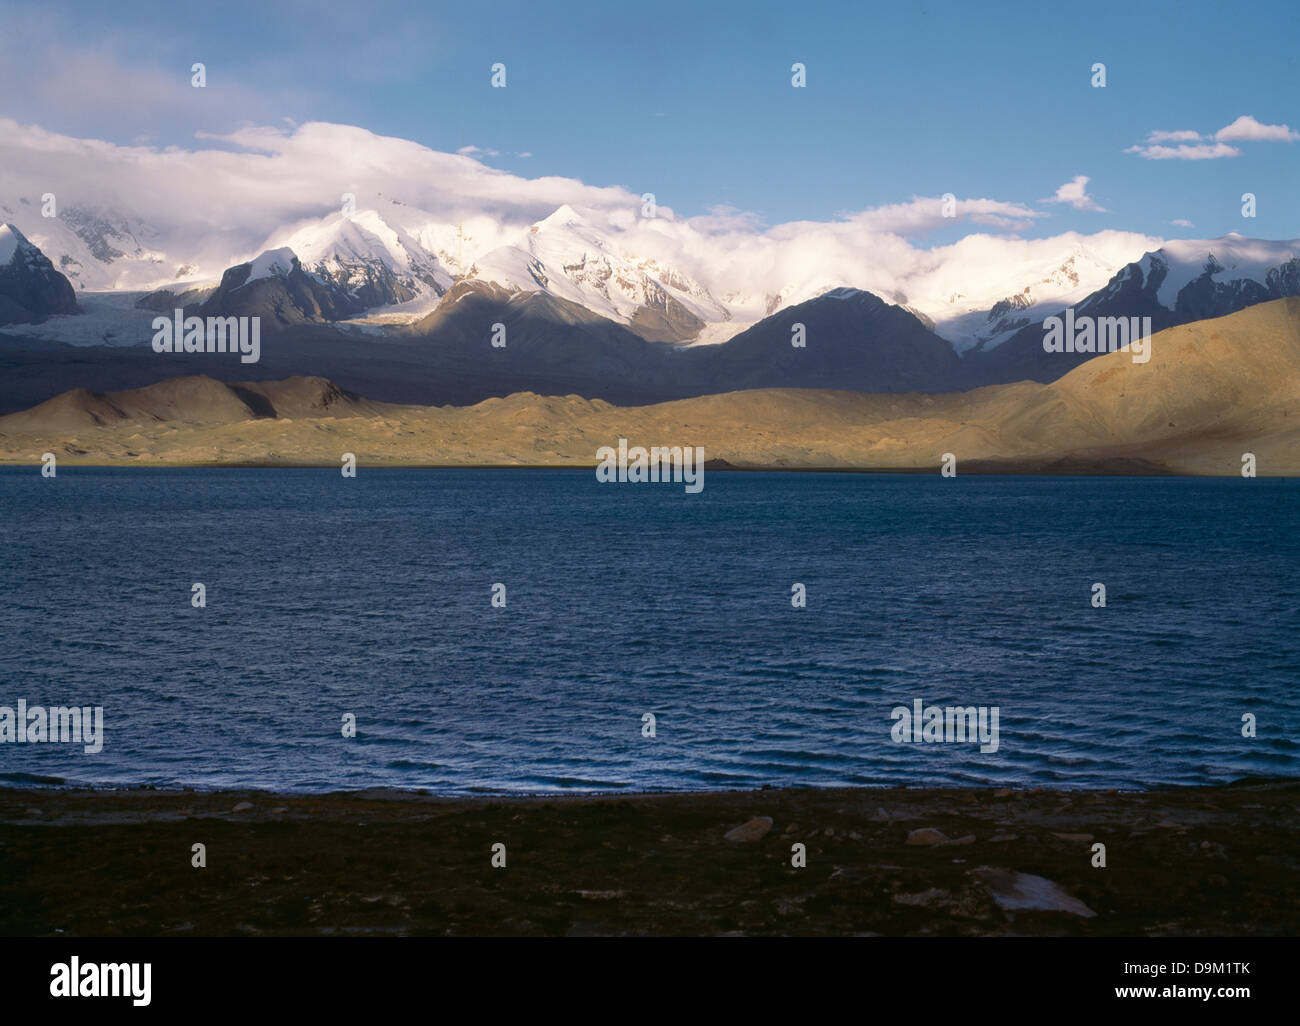 Il lago karakul & Monte Kongur kyzylsu kirghisa paese autonomo nello Xinjiang cina Foto Stock